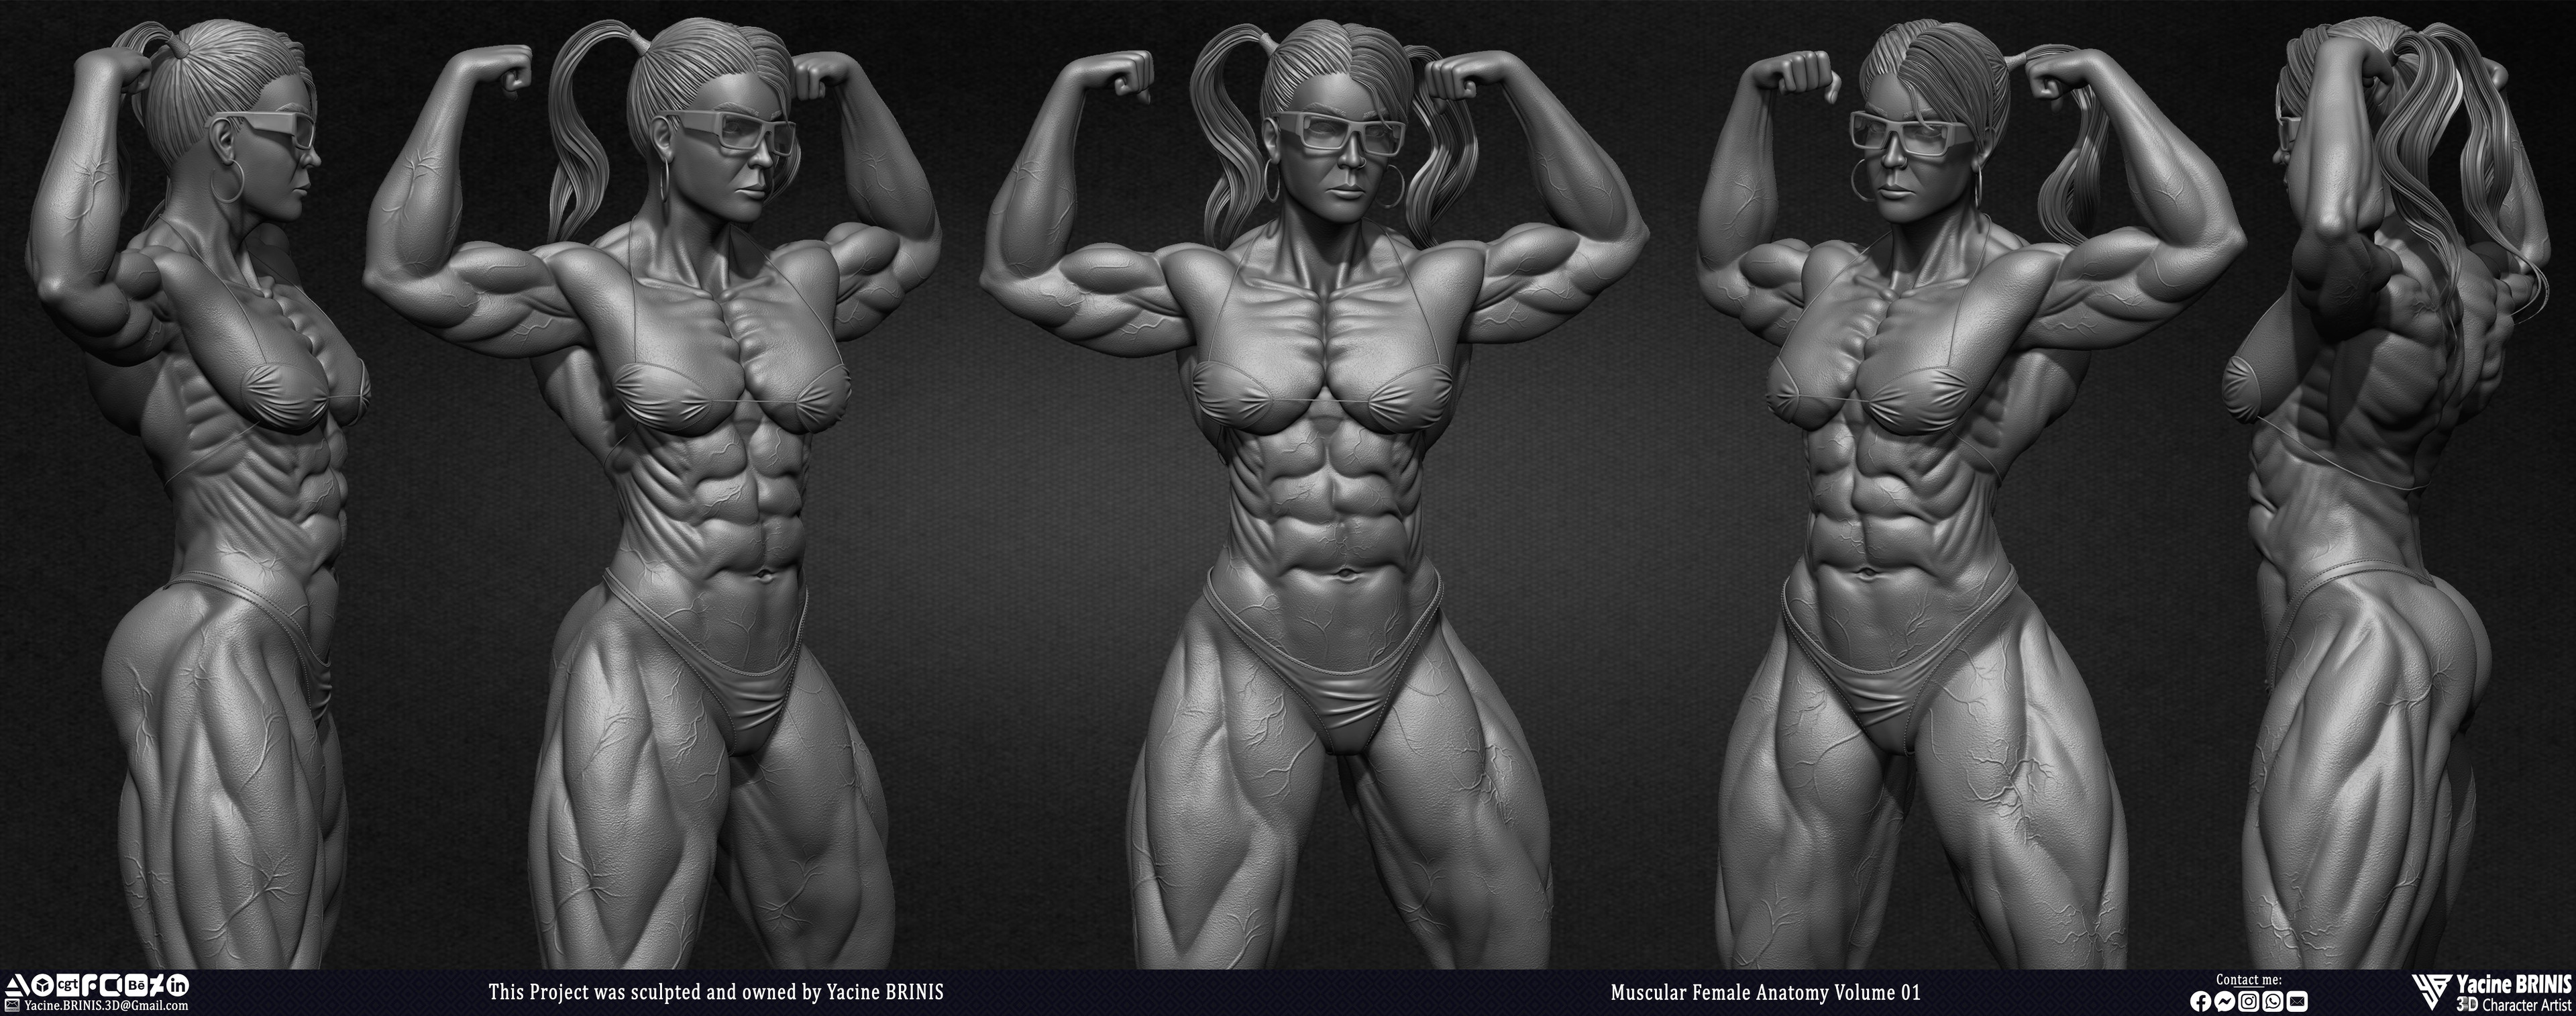 Muscular Female Anatomy Volume 01 sculpted by Yacine BRINIS 004